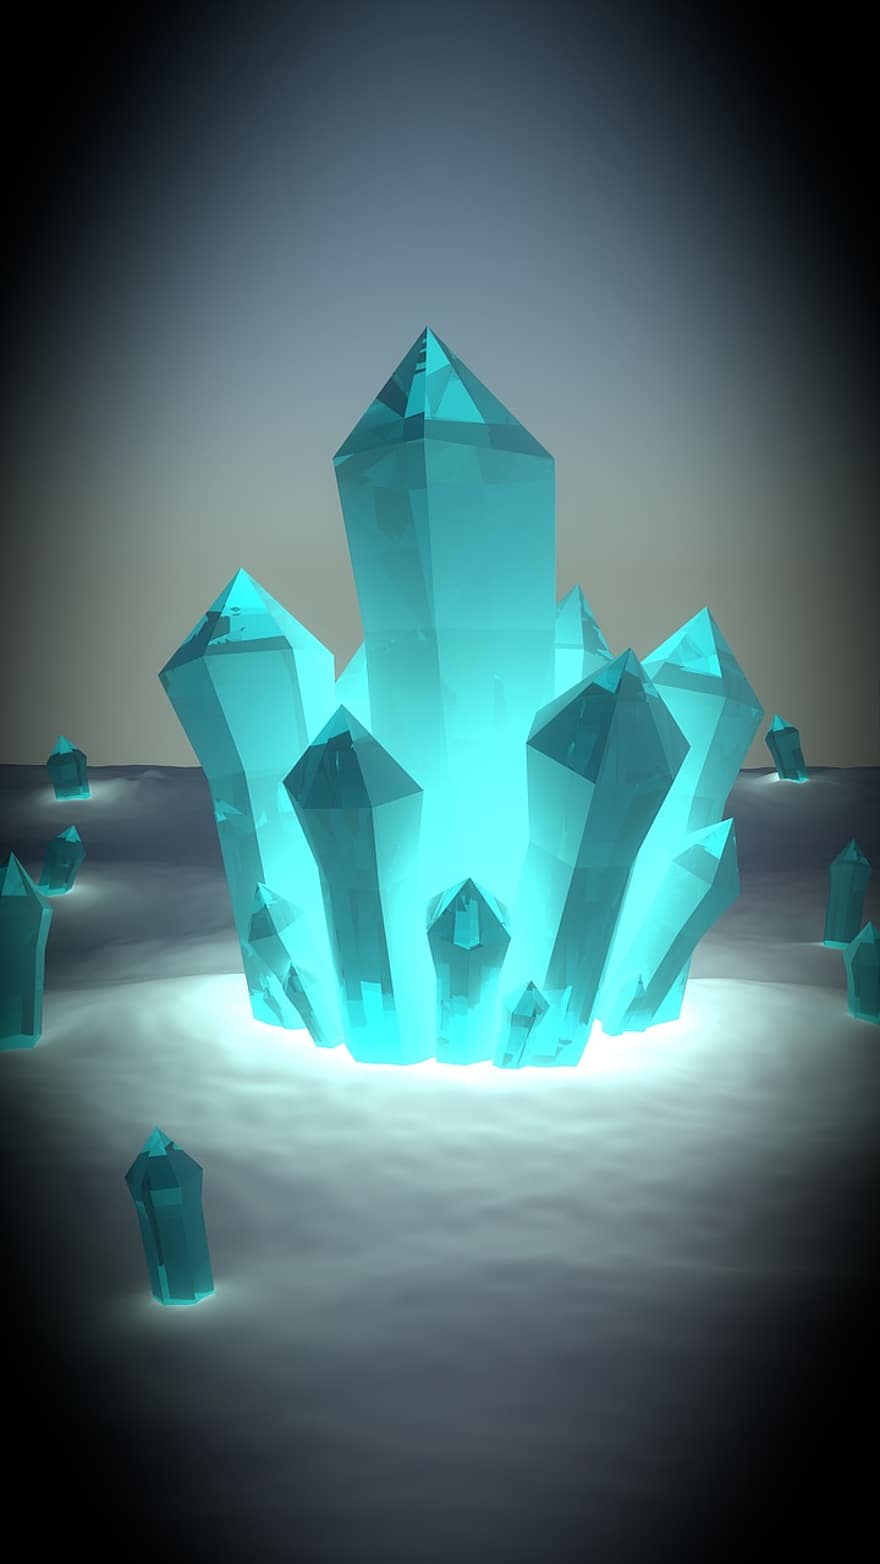 ijskristal, kristal, fantasie, magie, winter, blauw